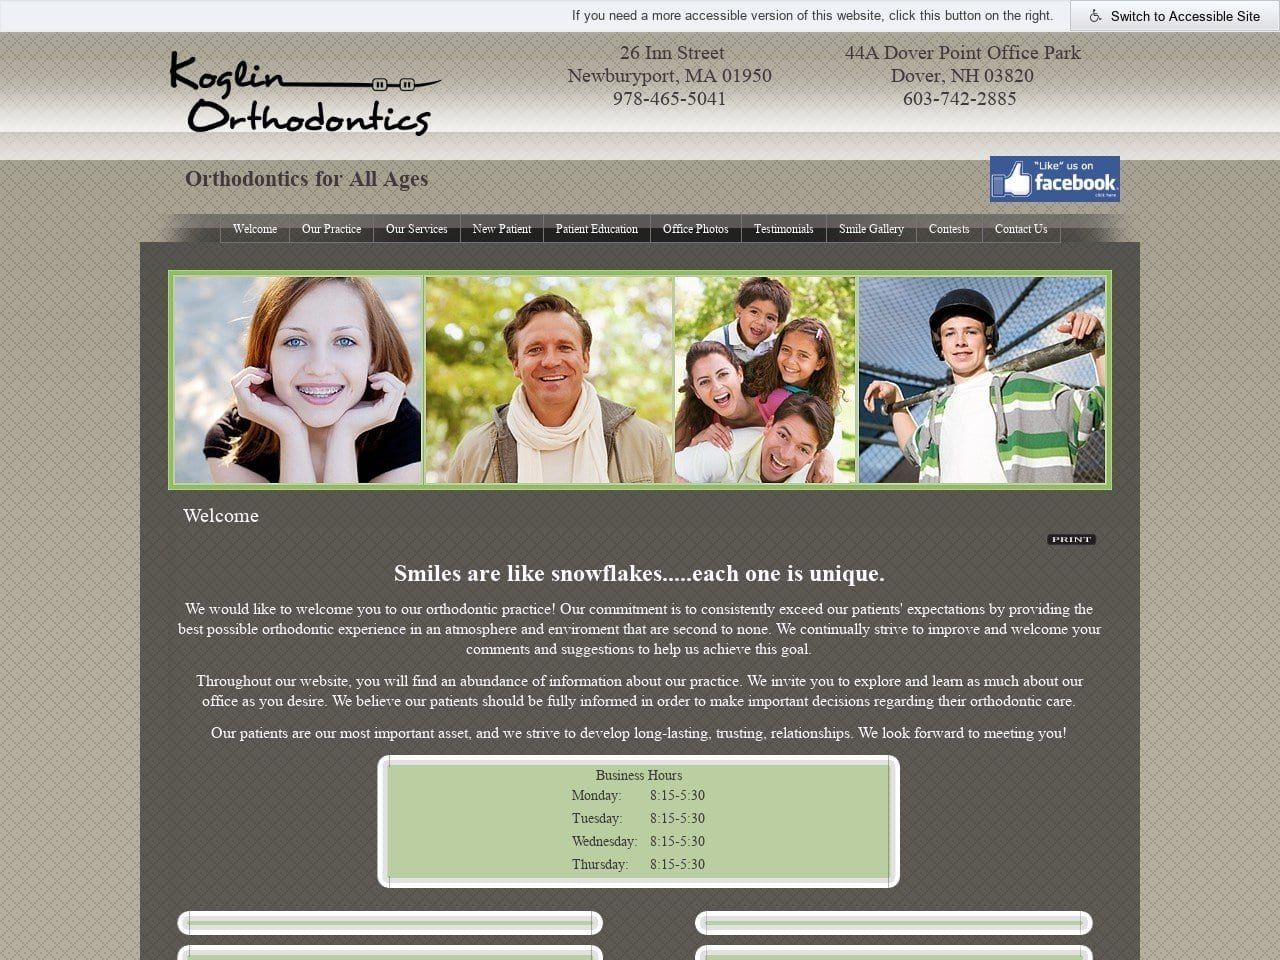 Koglin Orthodontics Website Screenshot from koglinorthodontics.com